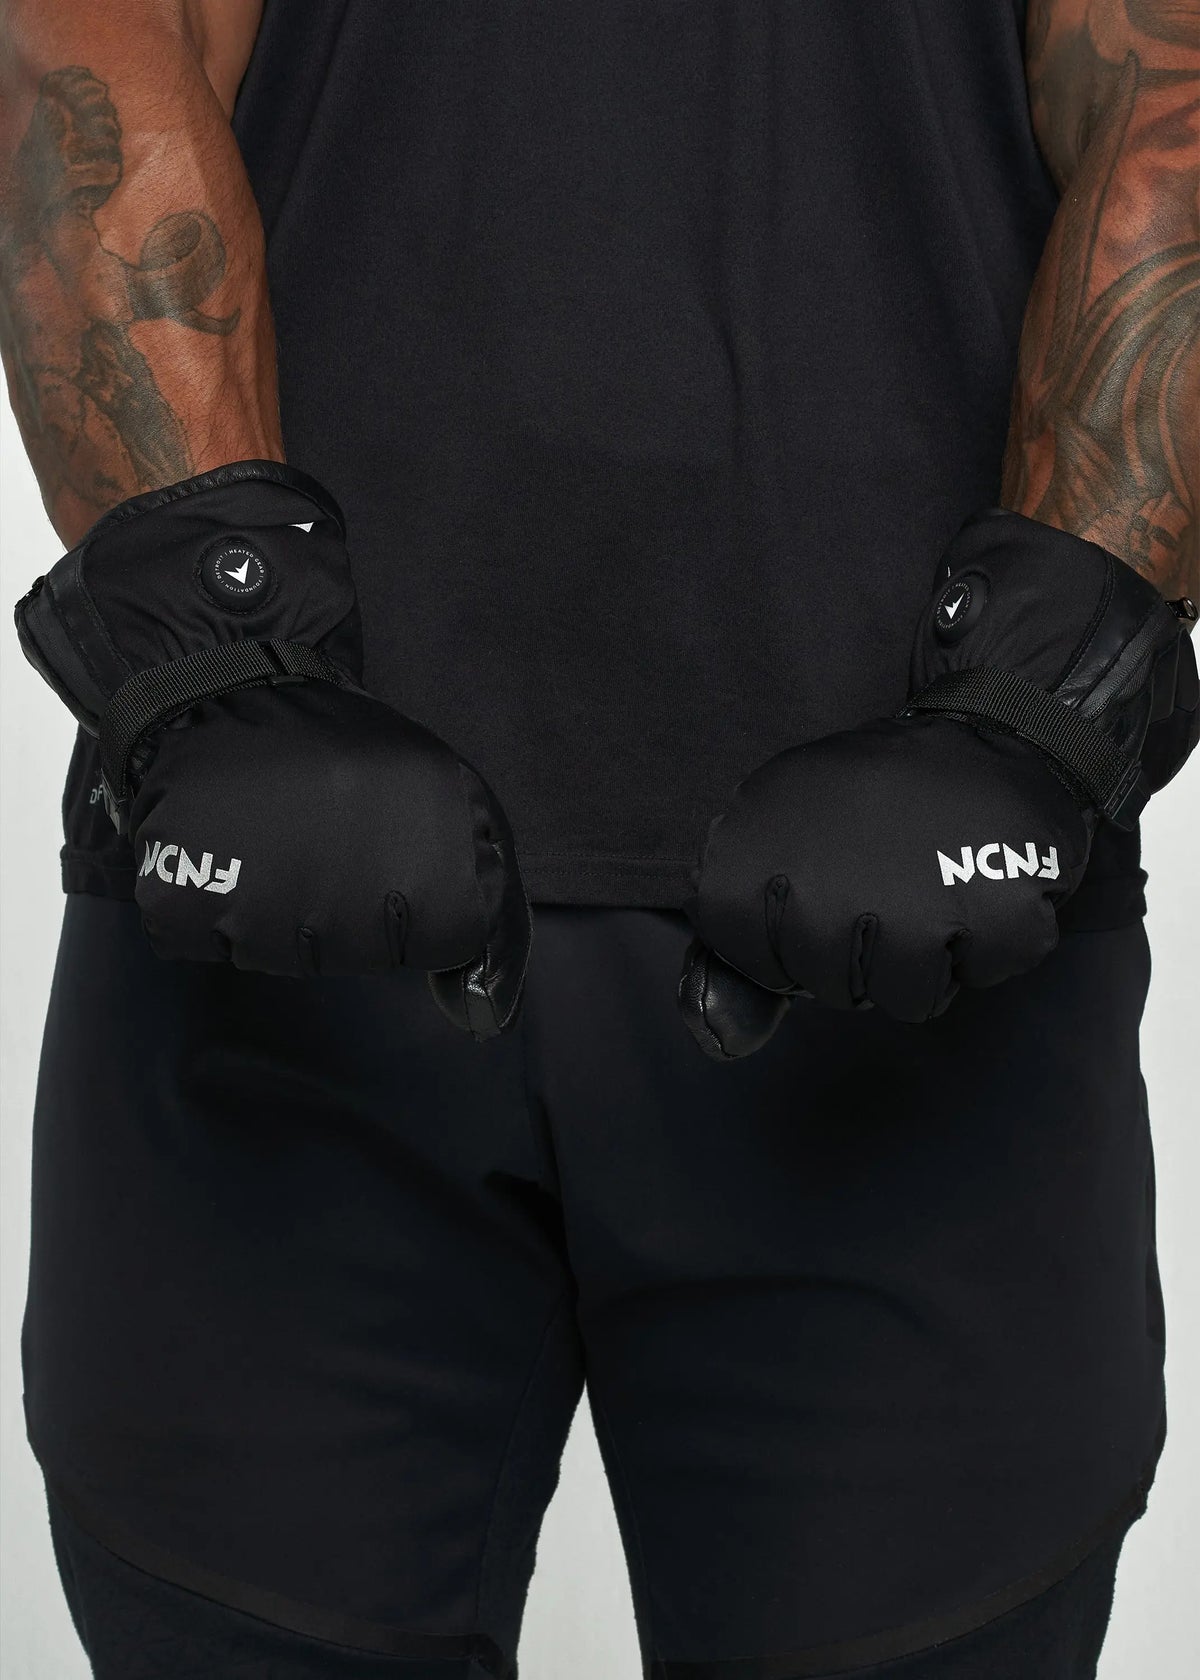 The FNDN G2 SnowPro Gloves